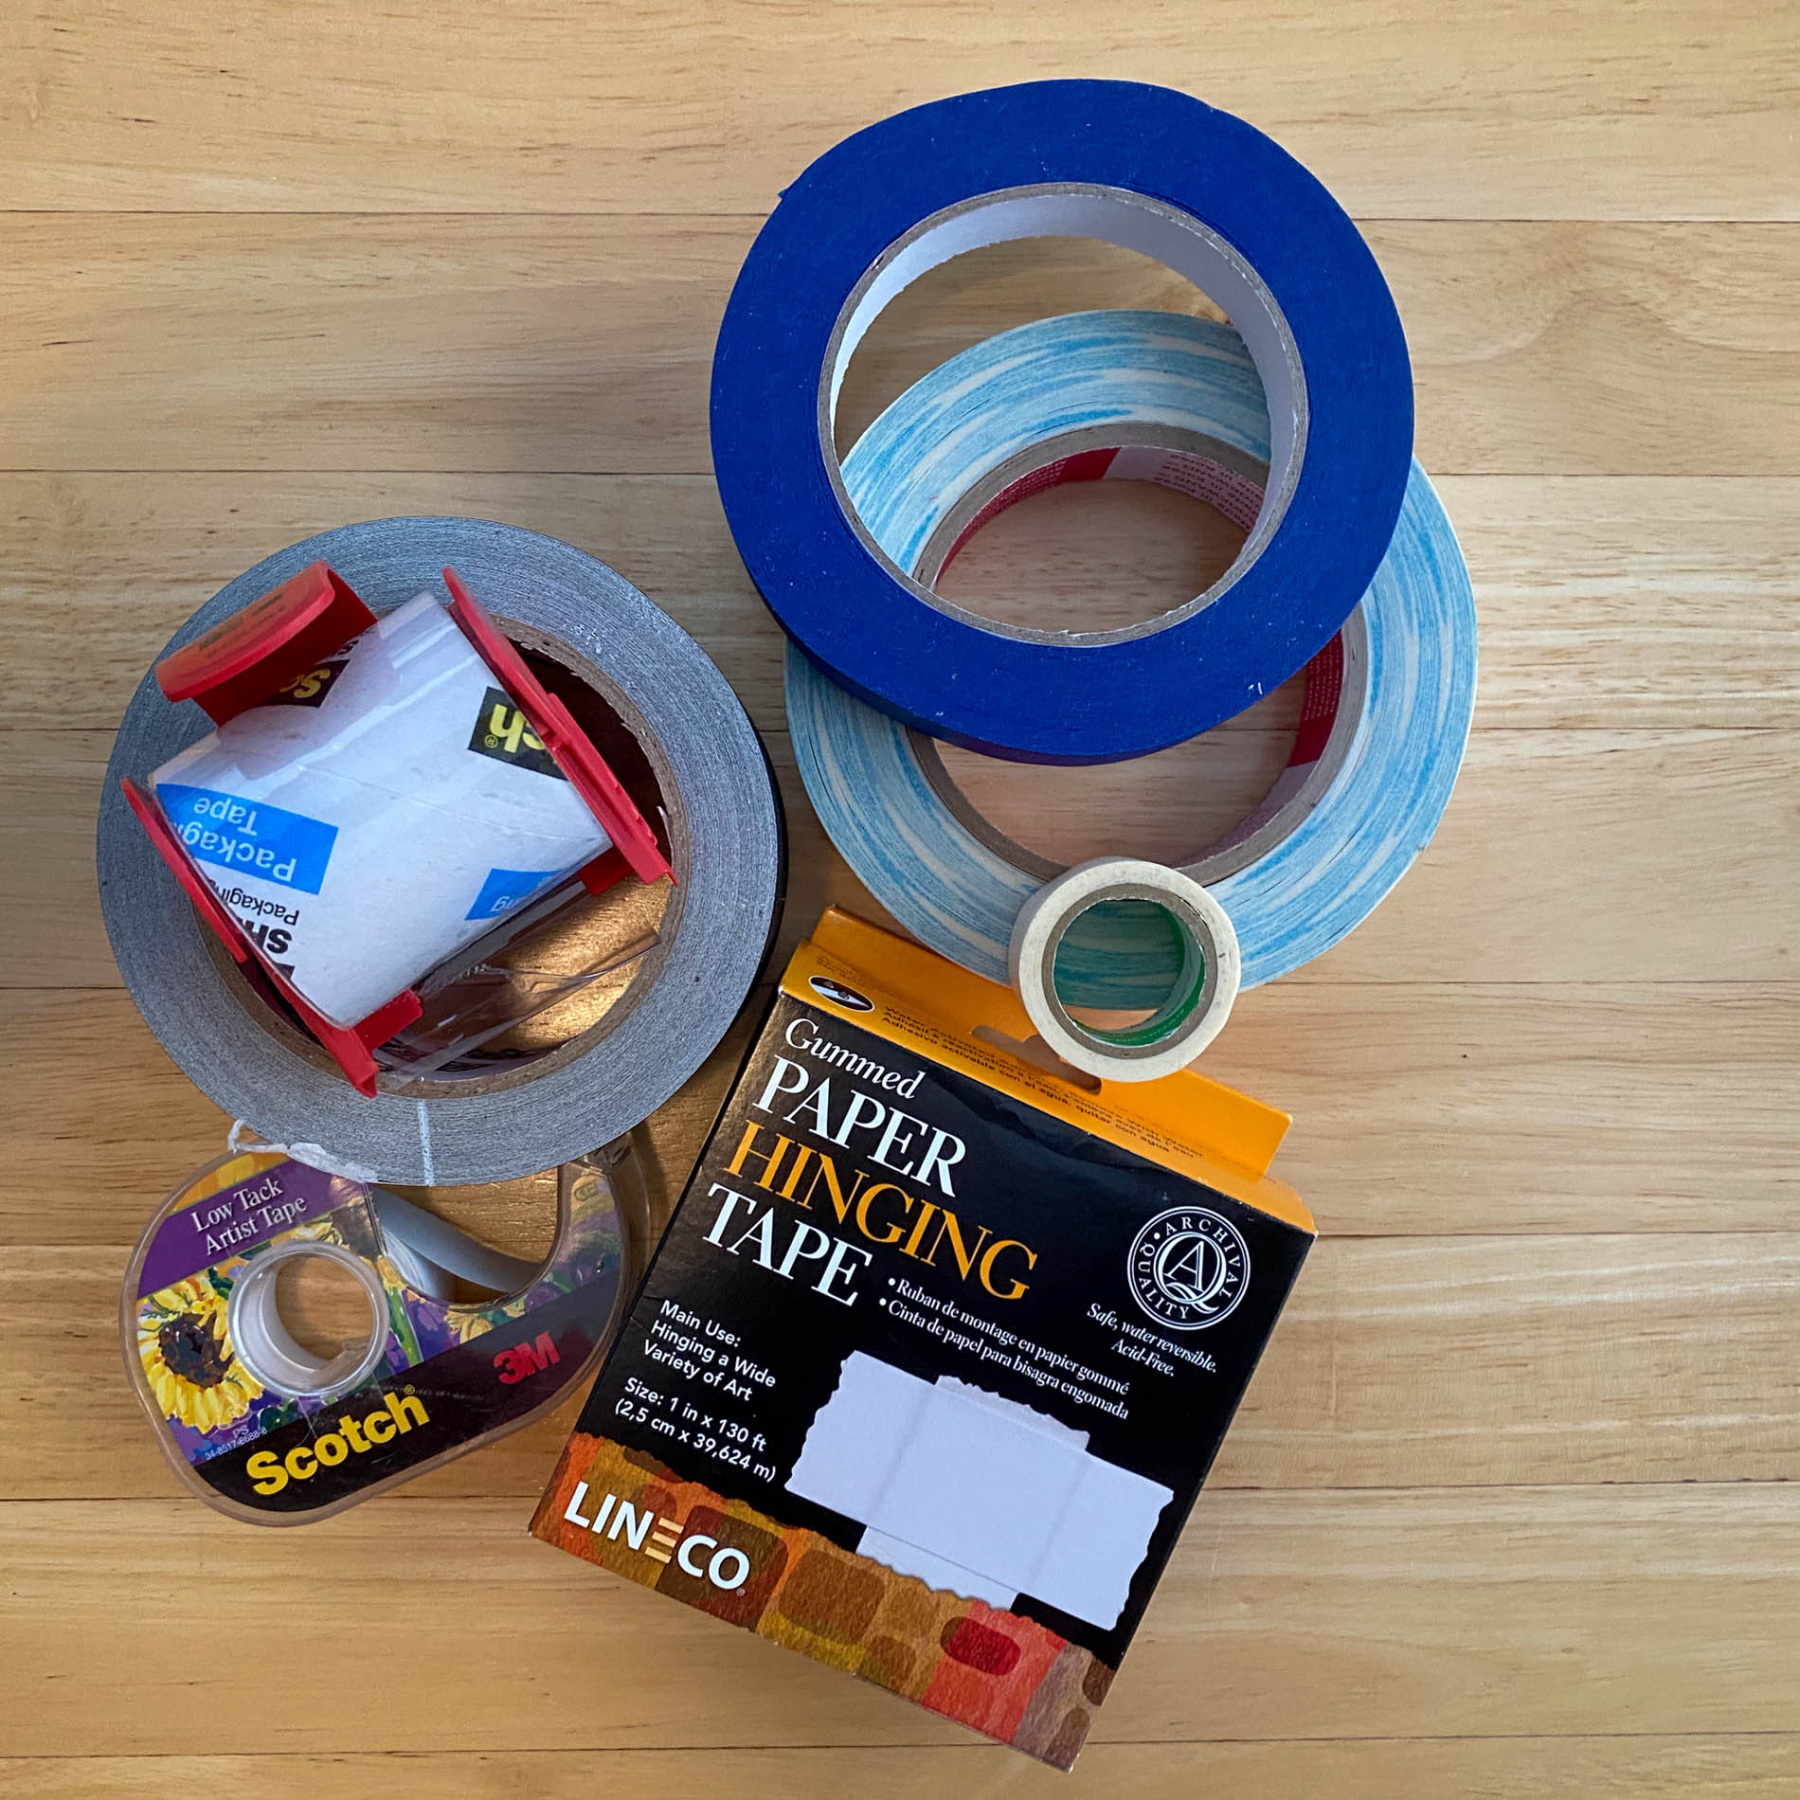 Lineco | Gummed Paper Hinging Tape 1in x 130ft